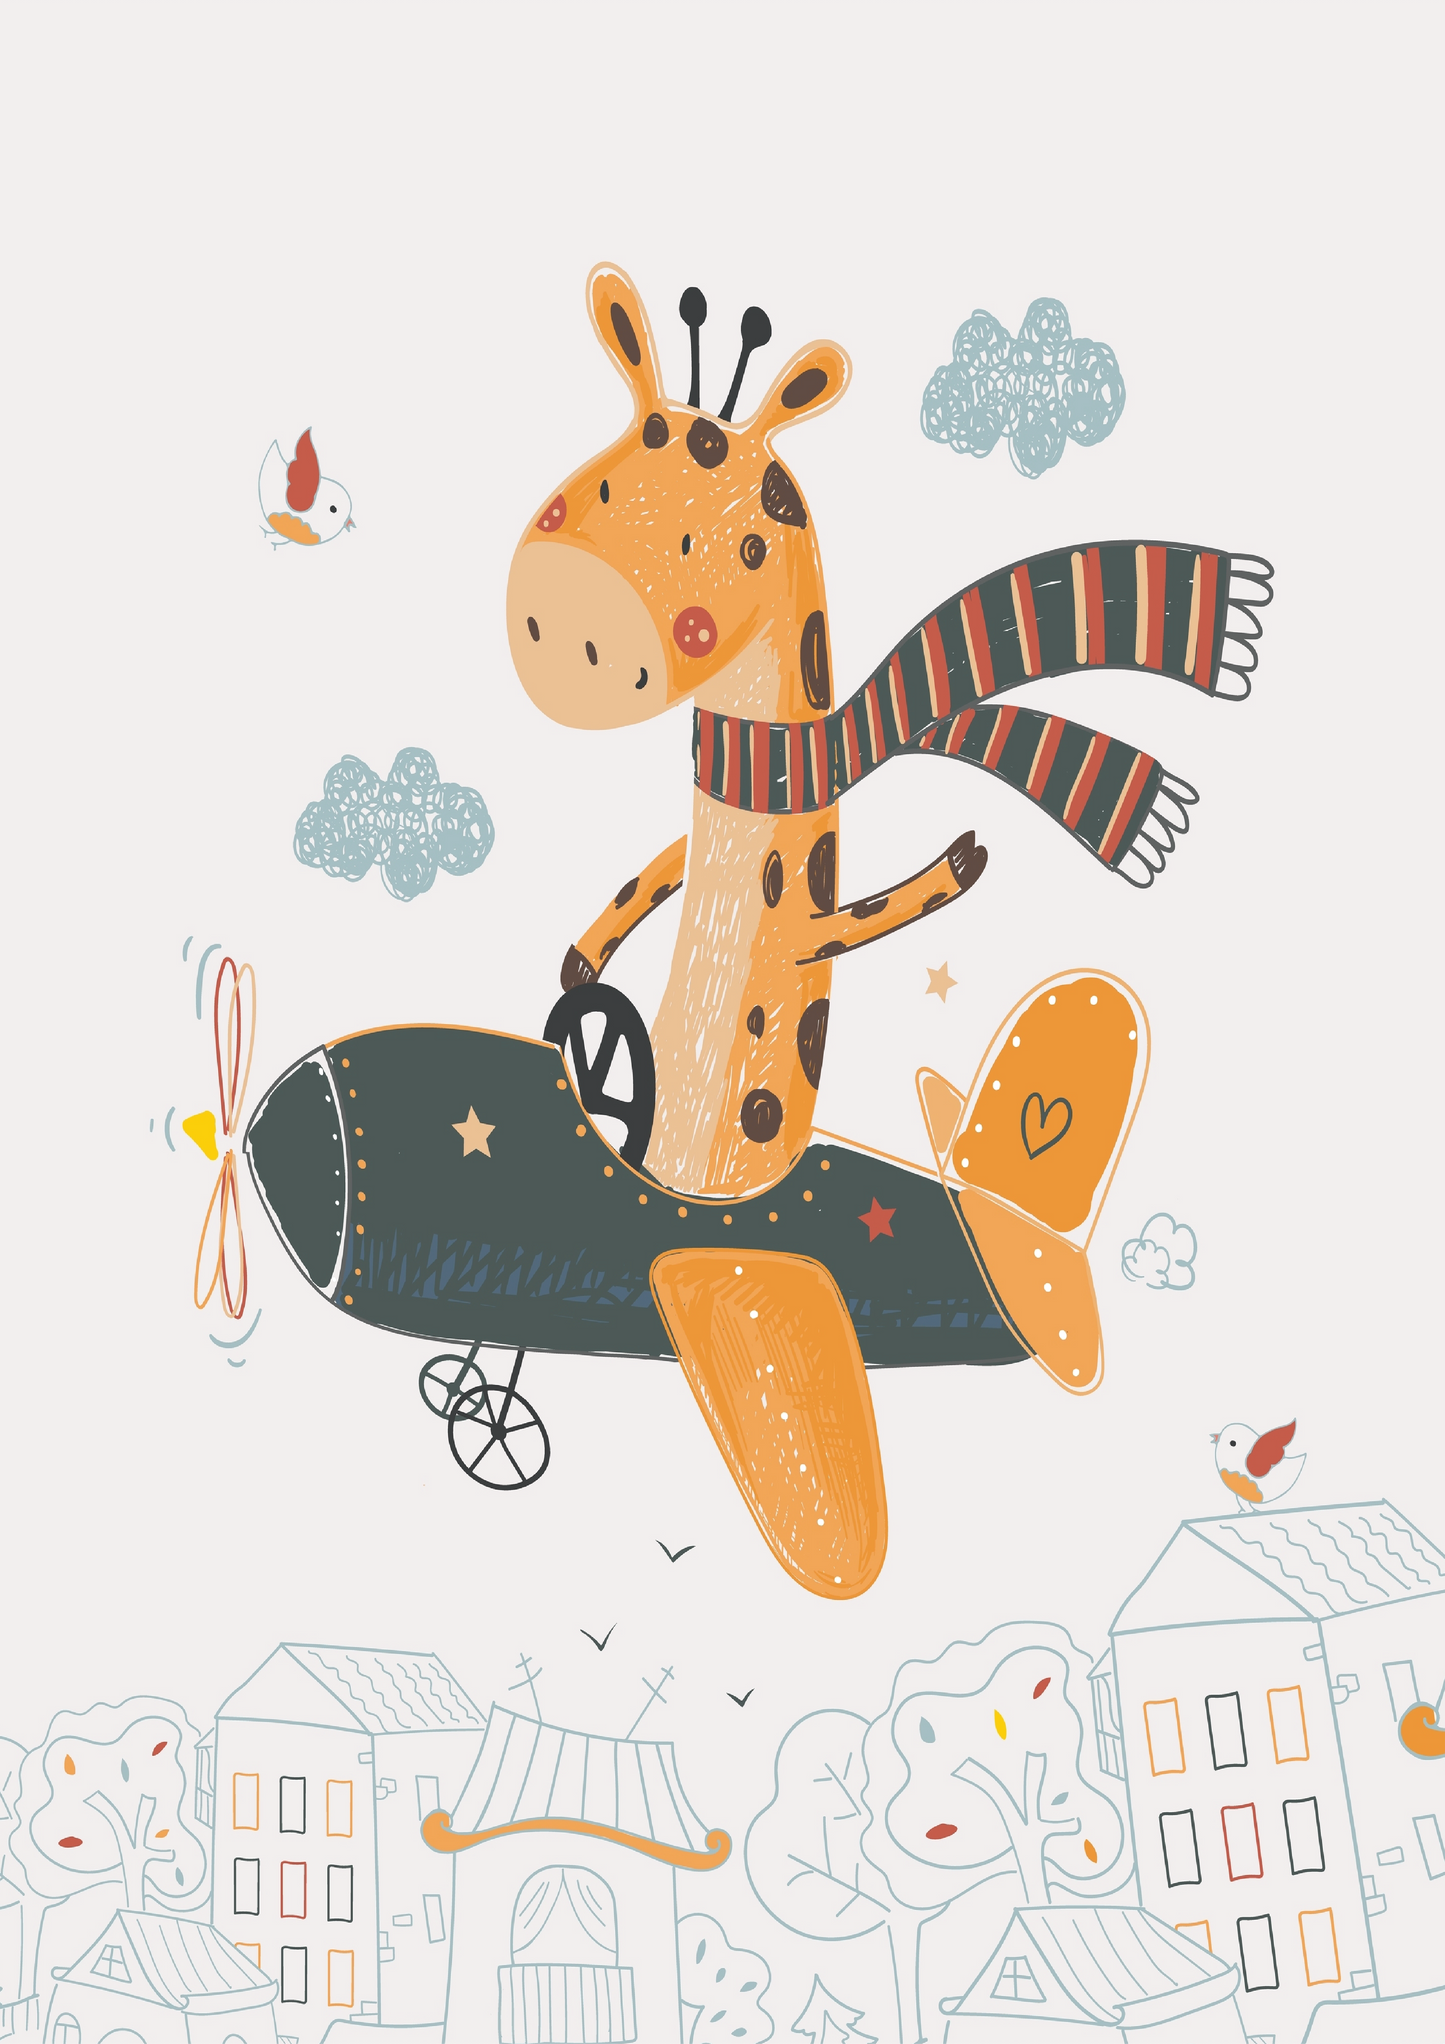 Giraffe in an aeroplane